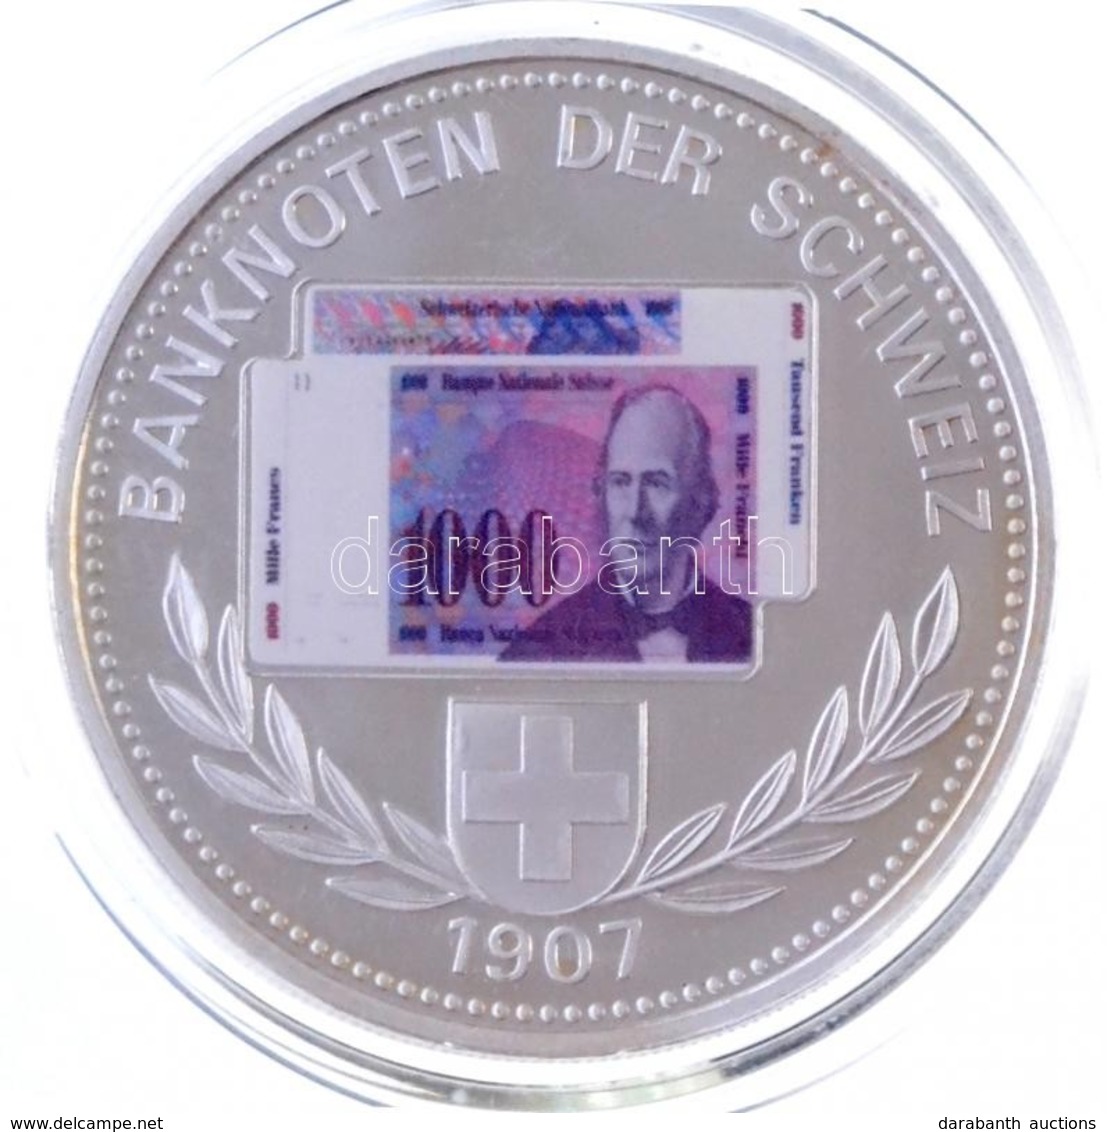 Svájc DN 'Banknoten Der Schweiz 1907 / Billets De Banque De Suisse - Banconote Della Svizzera' Ezüstözött Cu-Ni Emlékére - Zonder Classificatie